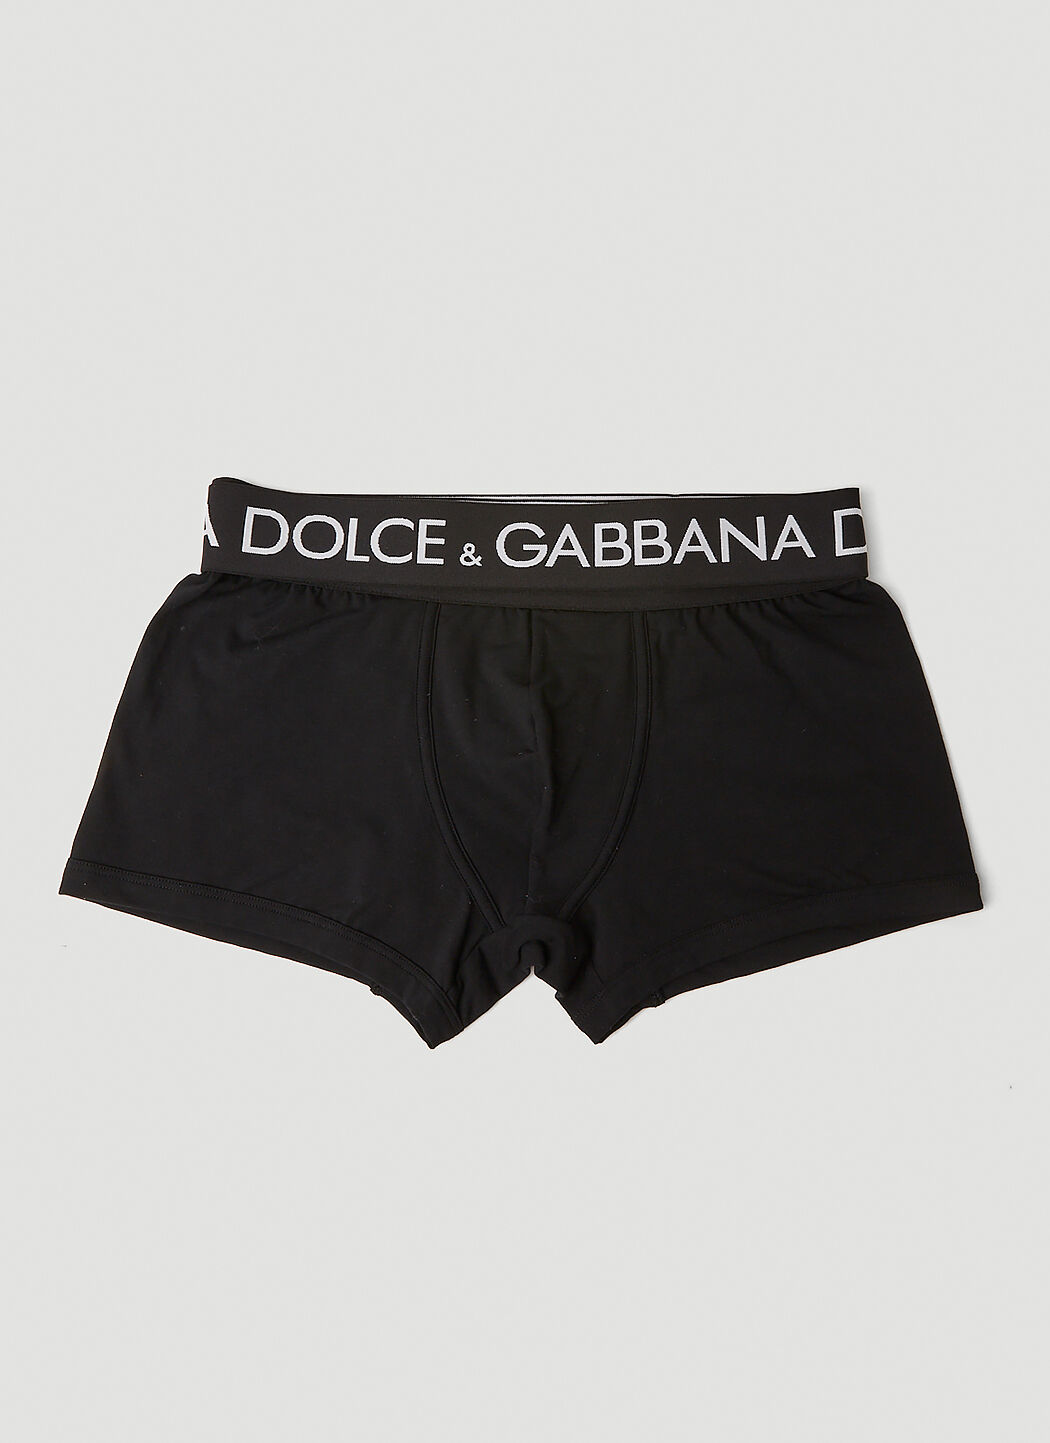 Dolce & Gabbana 徽标裤腰平角内裤 黑色 dol0156003